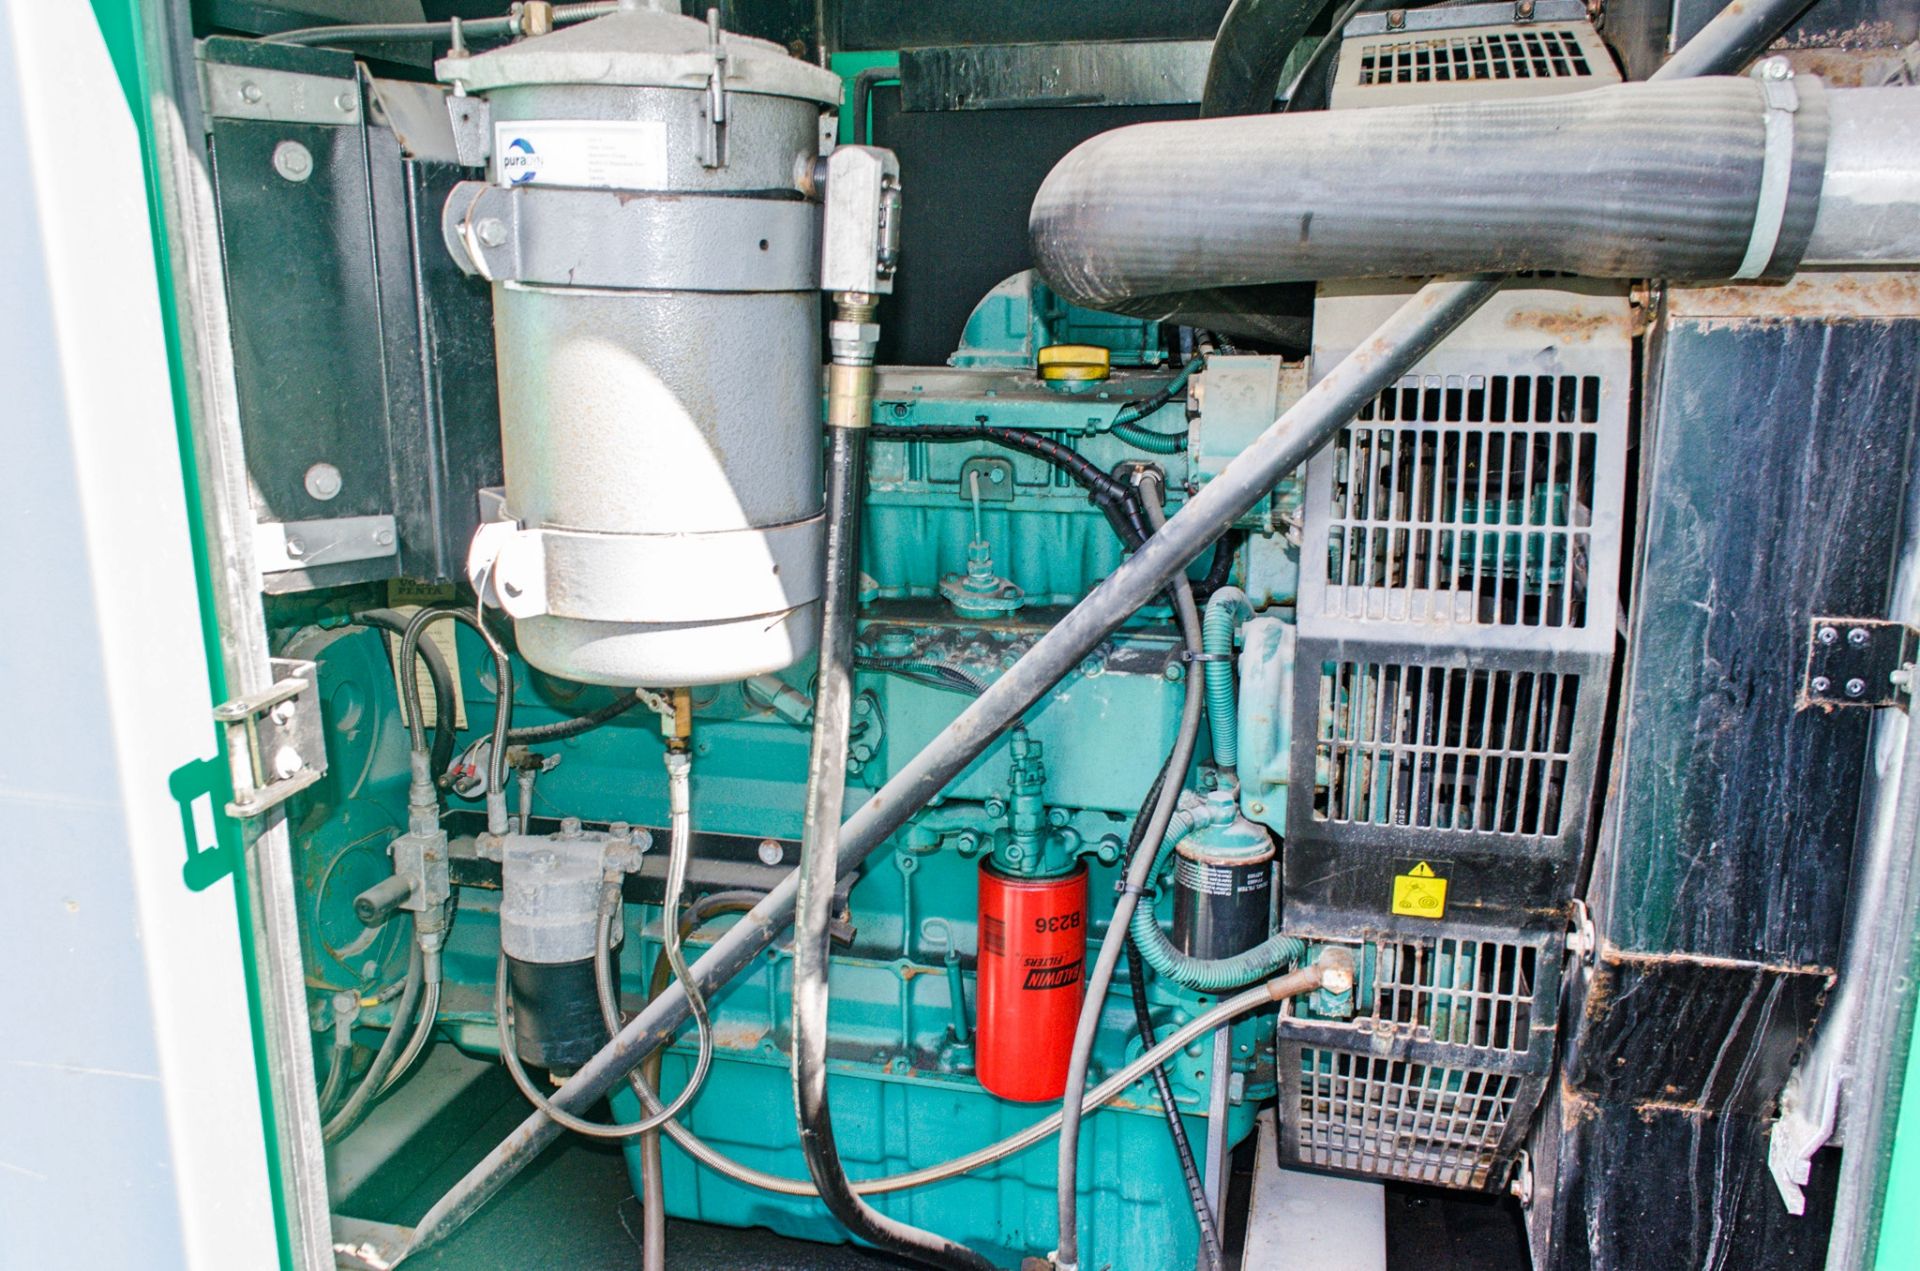 Genset MG220 SS-V 220 Kva diesel driven generator - Image 5 of 6